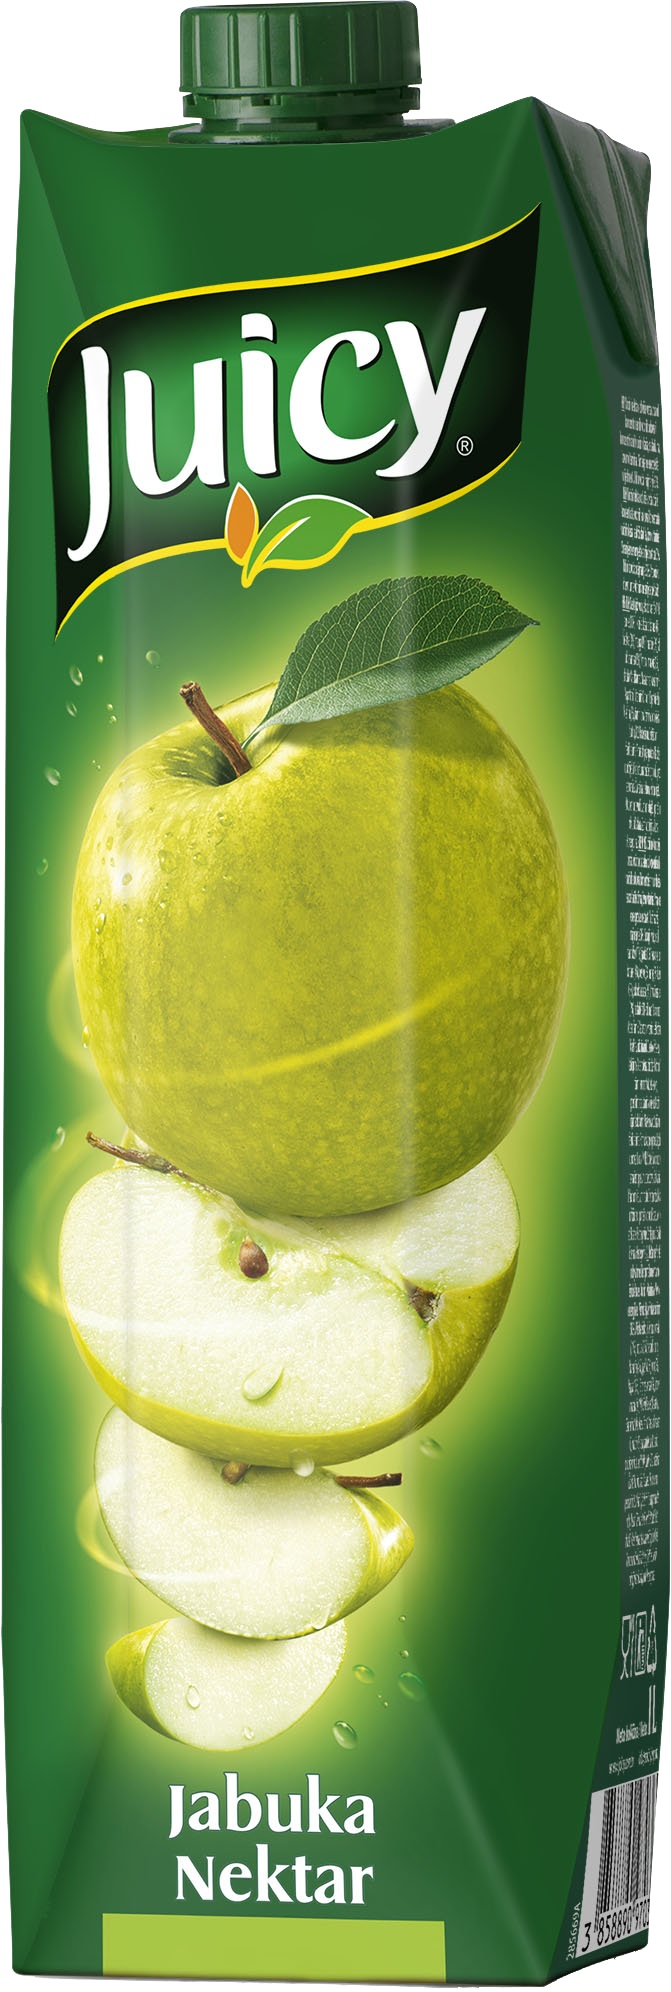 Slika za Sok  Jiucy jabuka nektar 1l